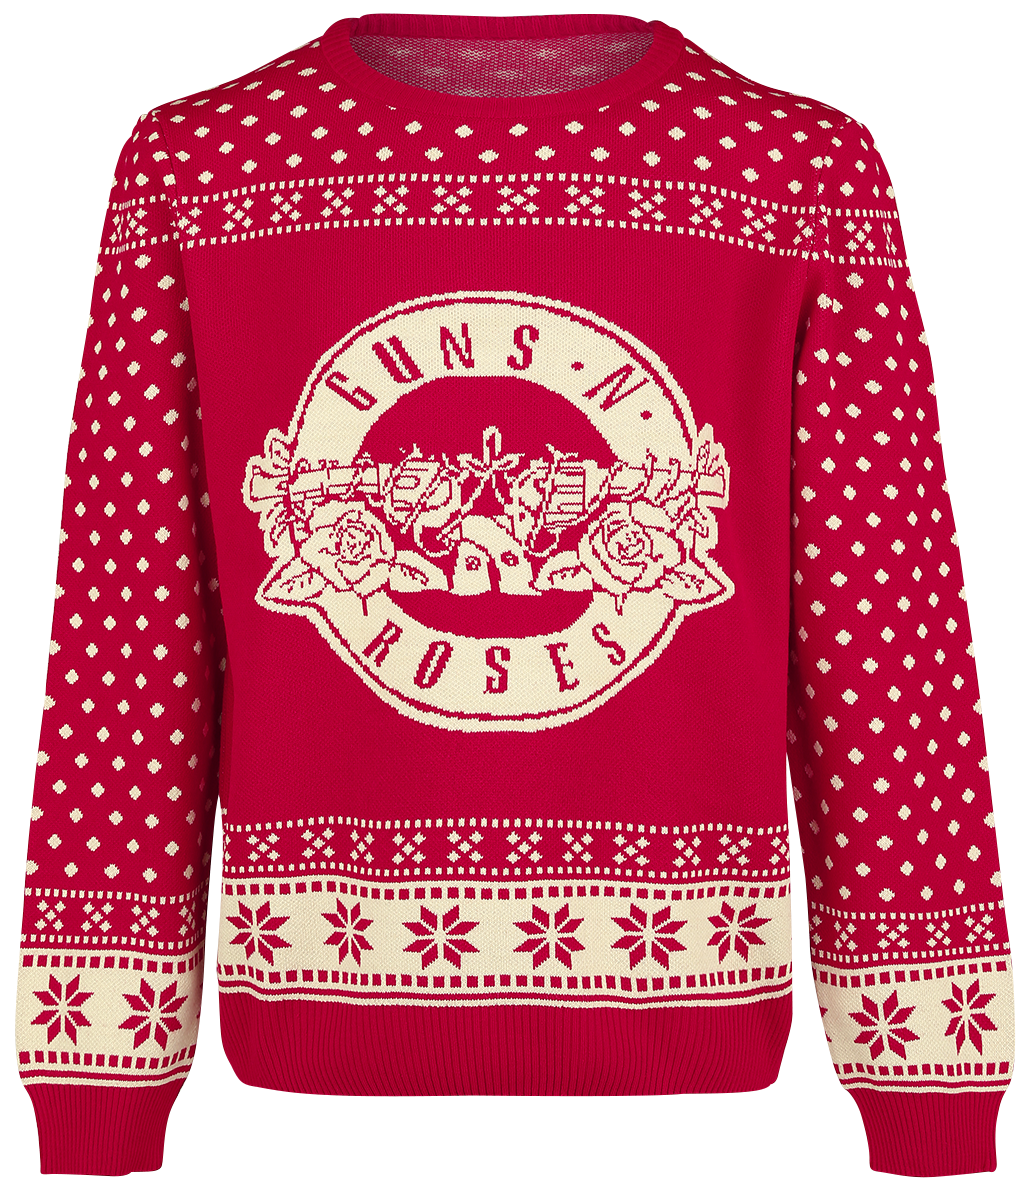 Guns N' Roses - Holiday Sweater 2019 - Sweatshirt - multicolour image